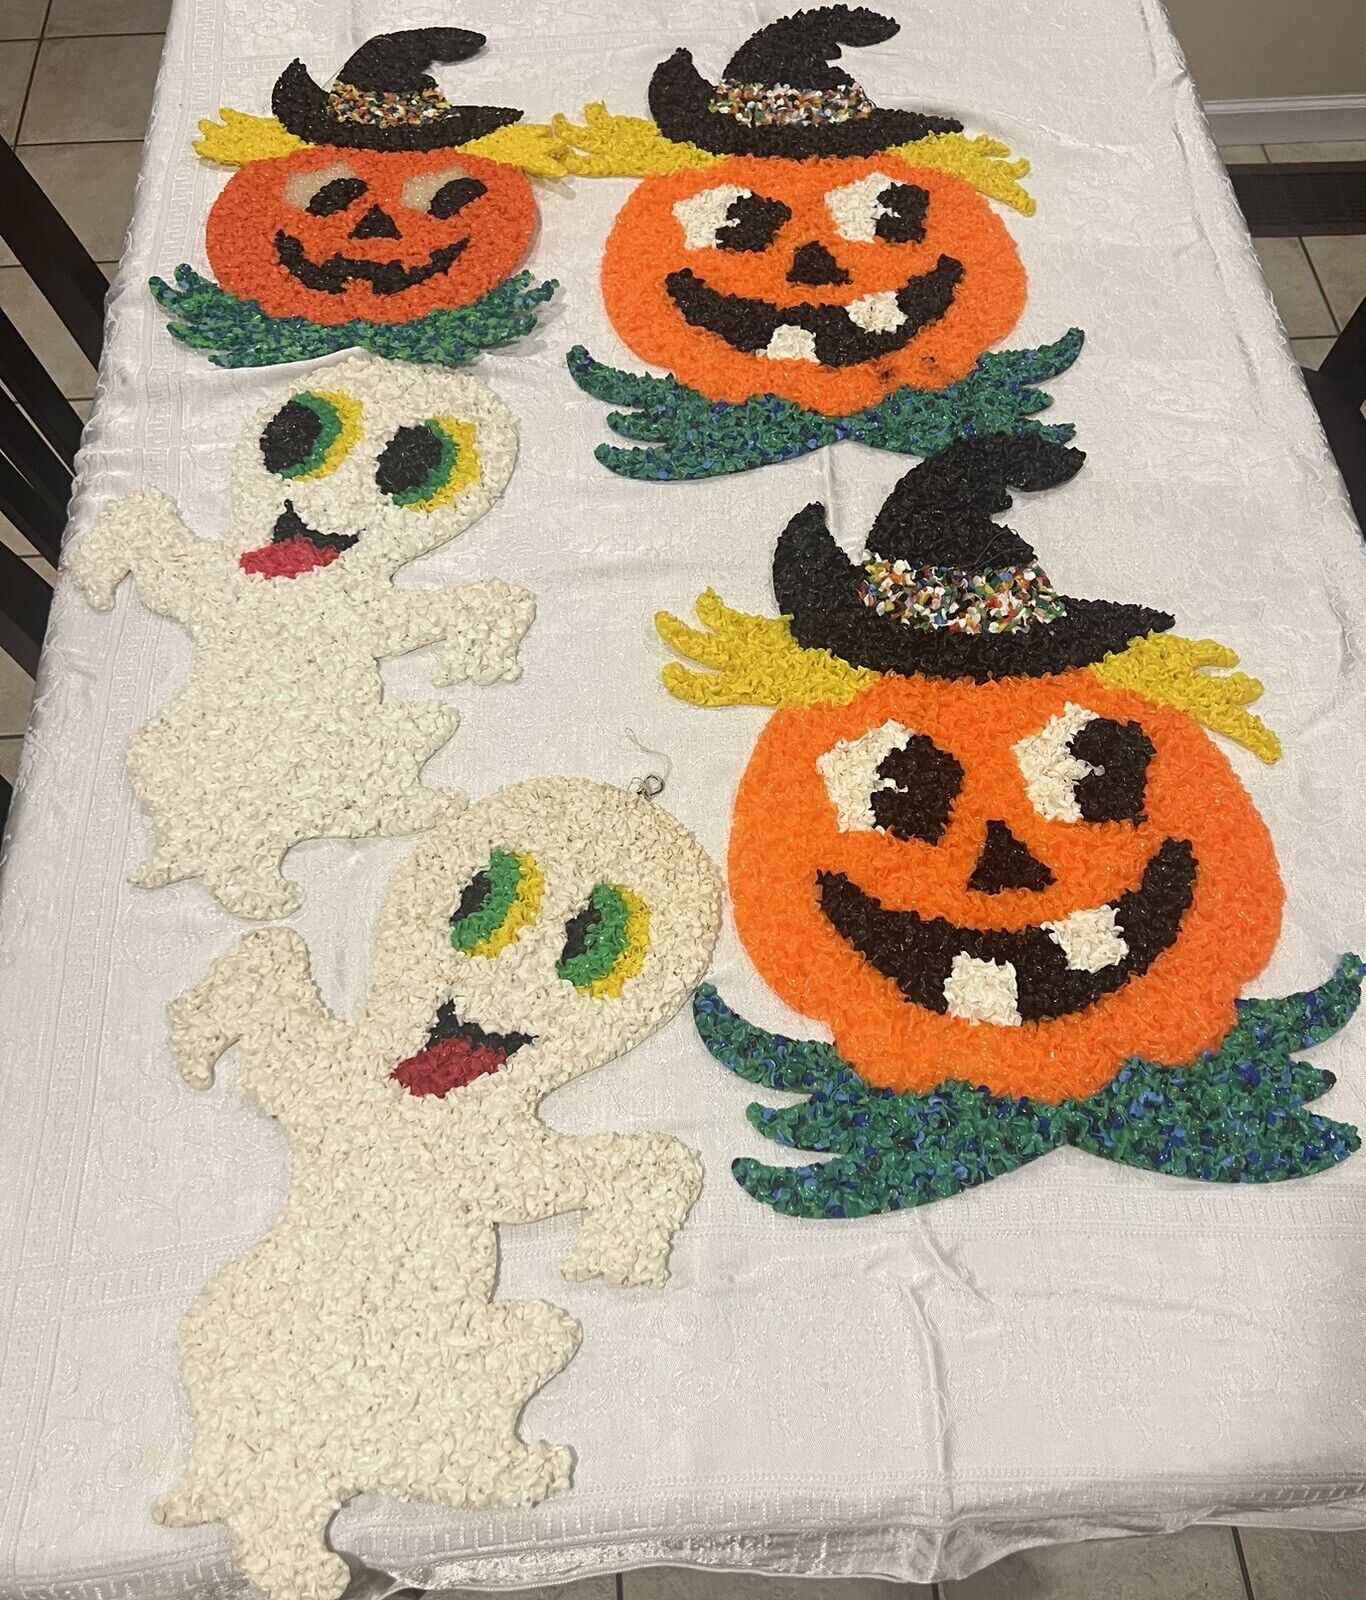 5 Large Vintage Lot Popcorn Melted Plastic Halloween Decorations Pumpkin Ghost